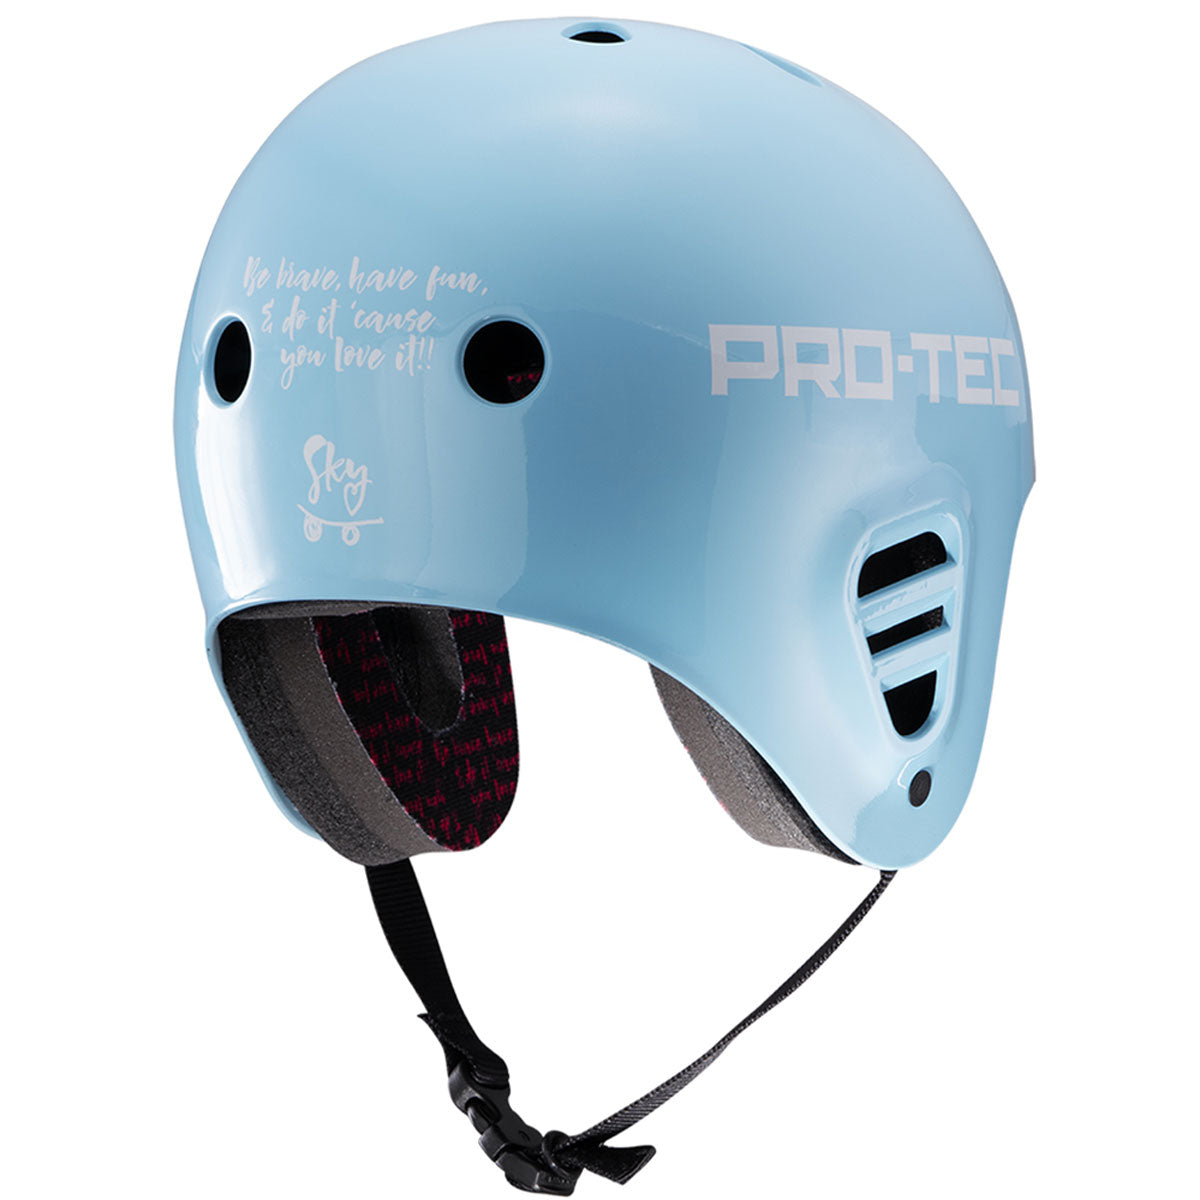 Pro Tec Full Cut Certified Sky Brown Pro Helmet - Blue image 2